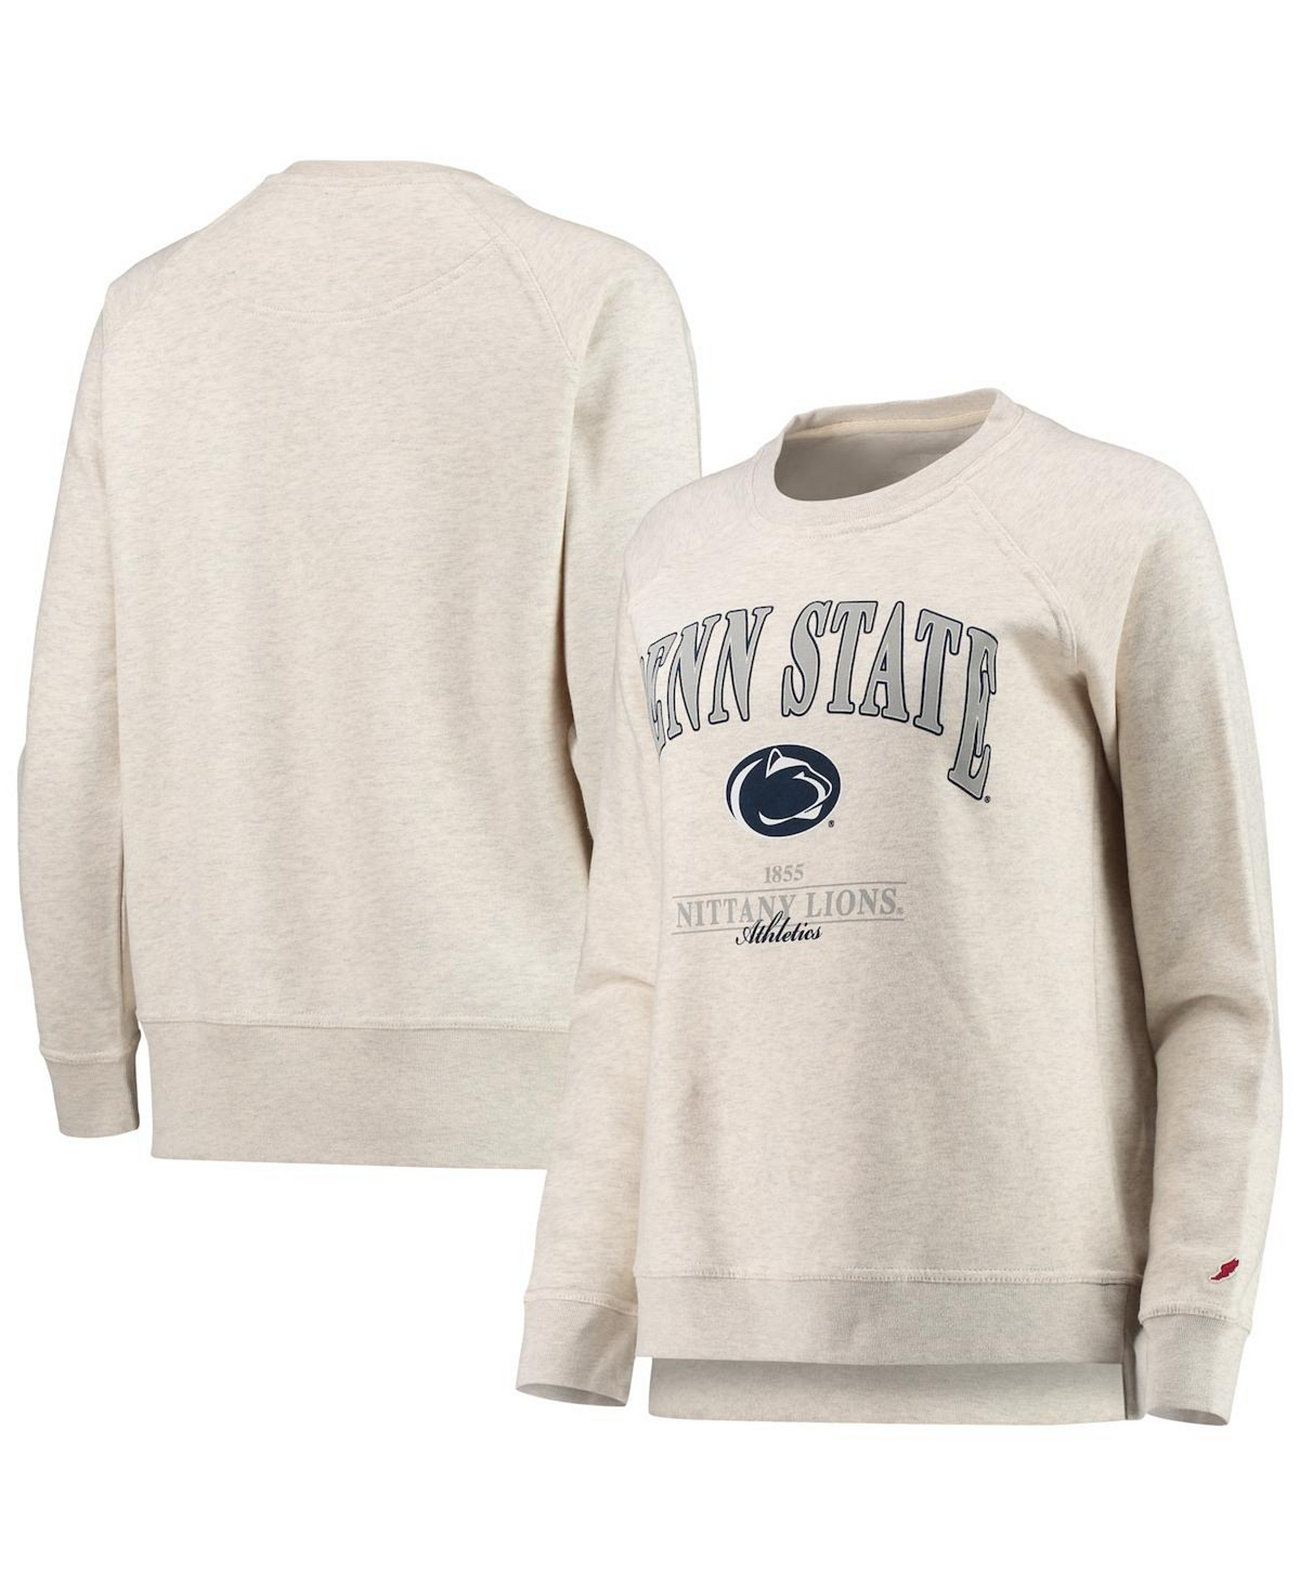 Женская овсяная толстовка Penn State Nittany Lions Academy с реглановым пуловером League Collegiate Wear